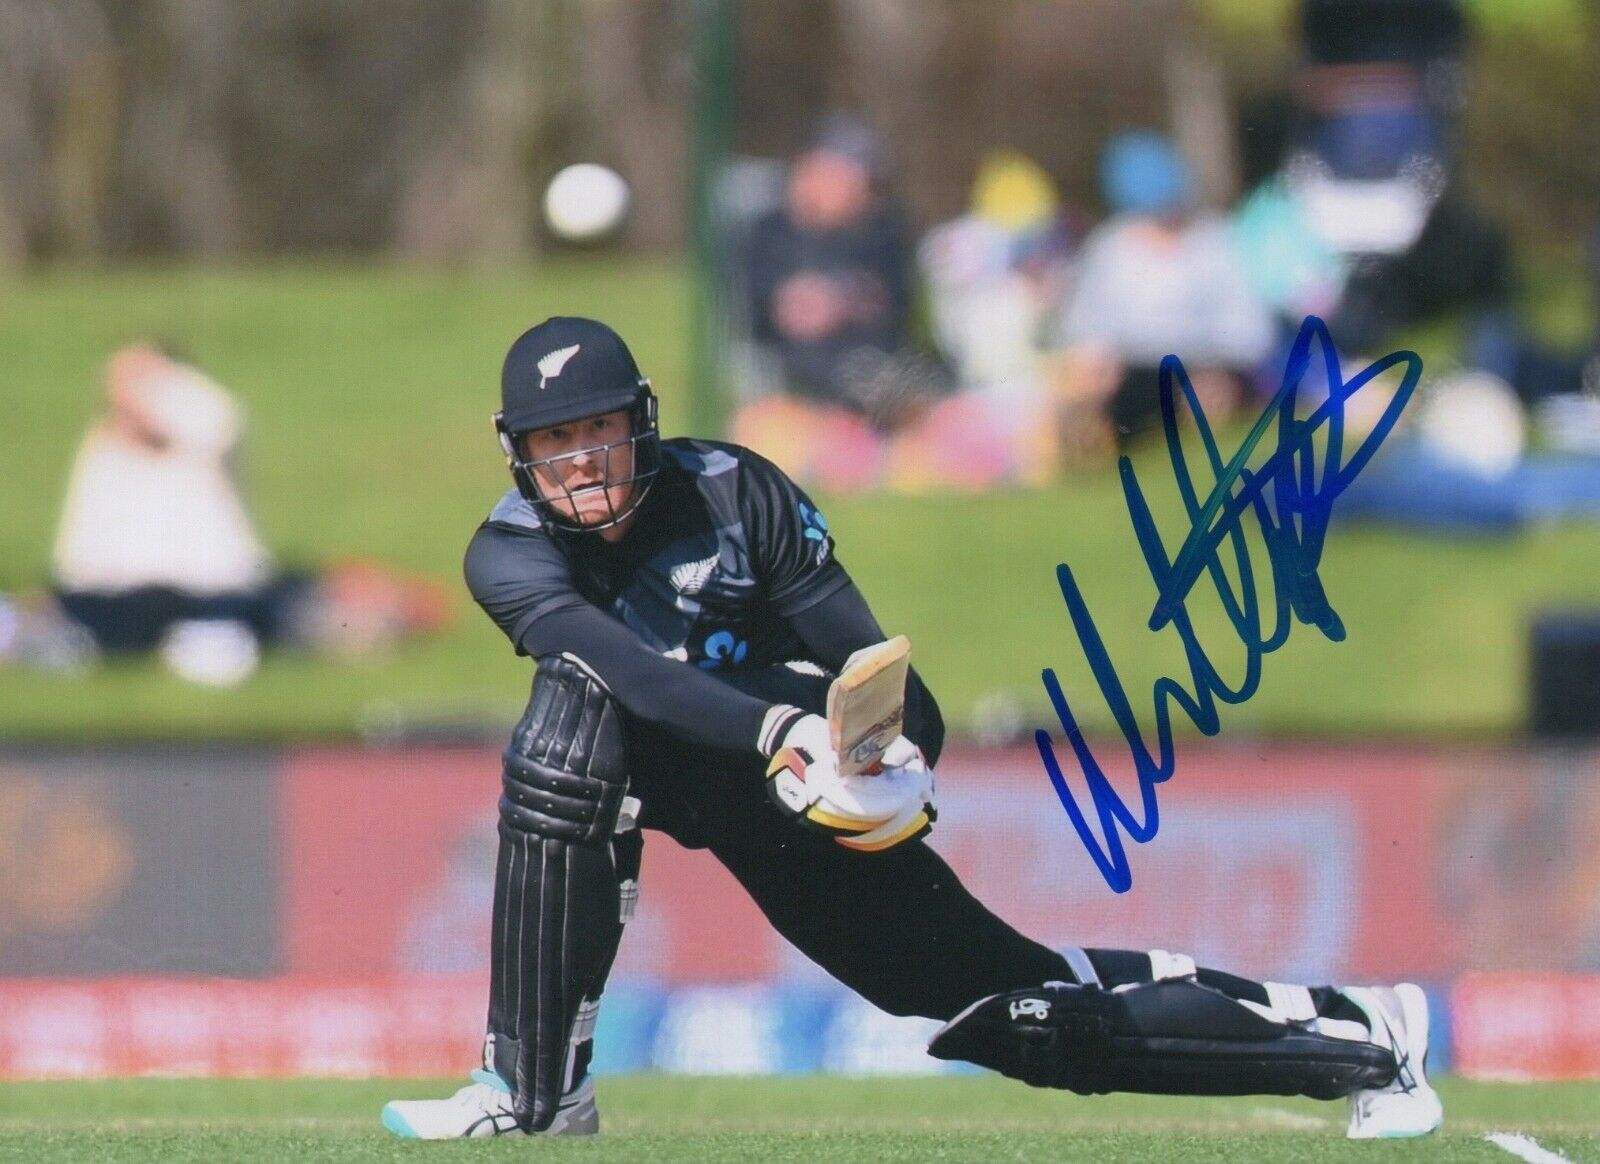 5x7 Original Autographed Photo of New Zealand Cricketer Martin Guptill